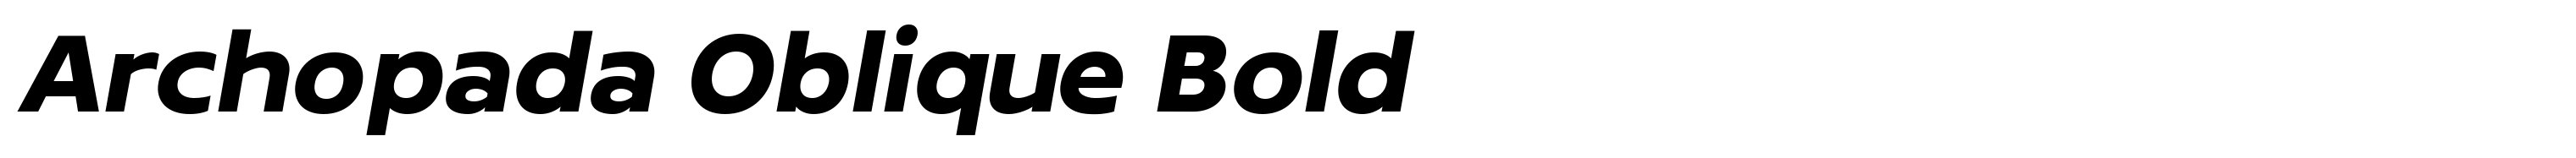 Archopada Oblique Bold